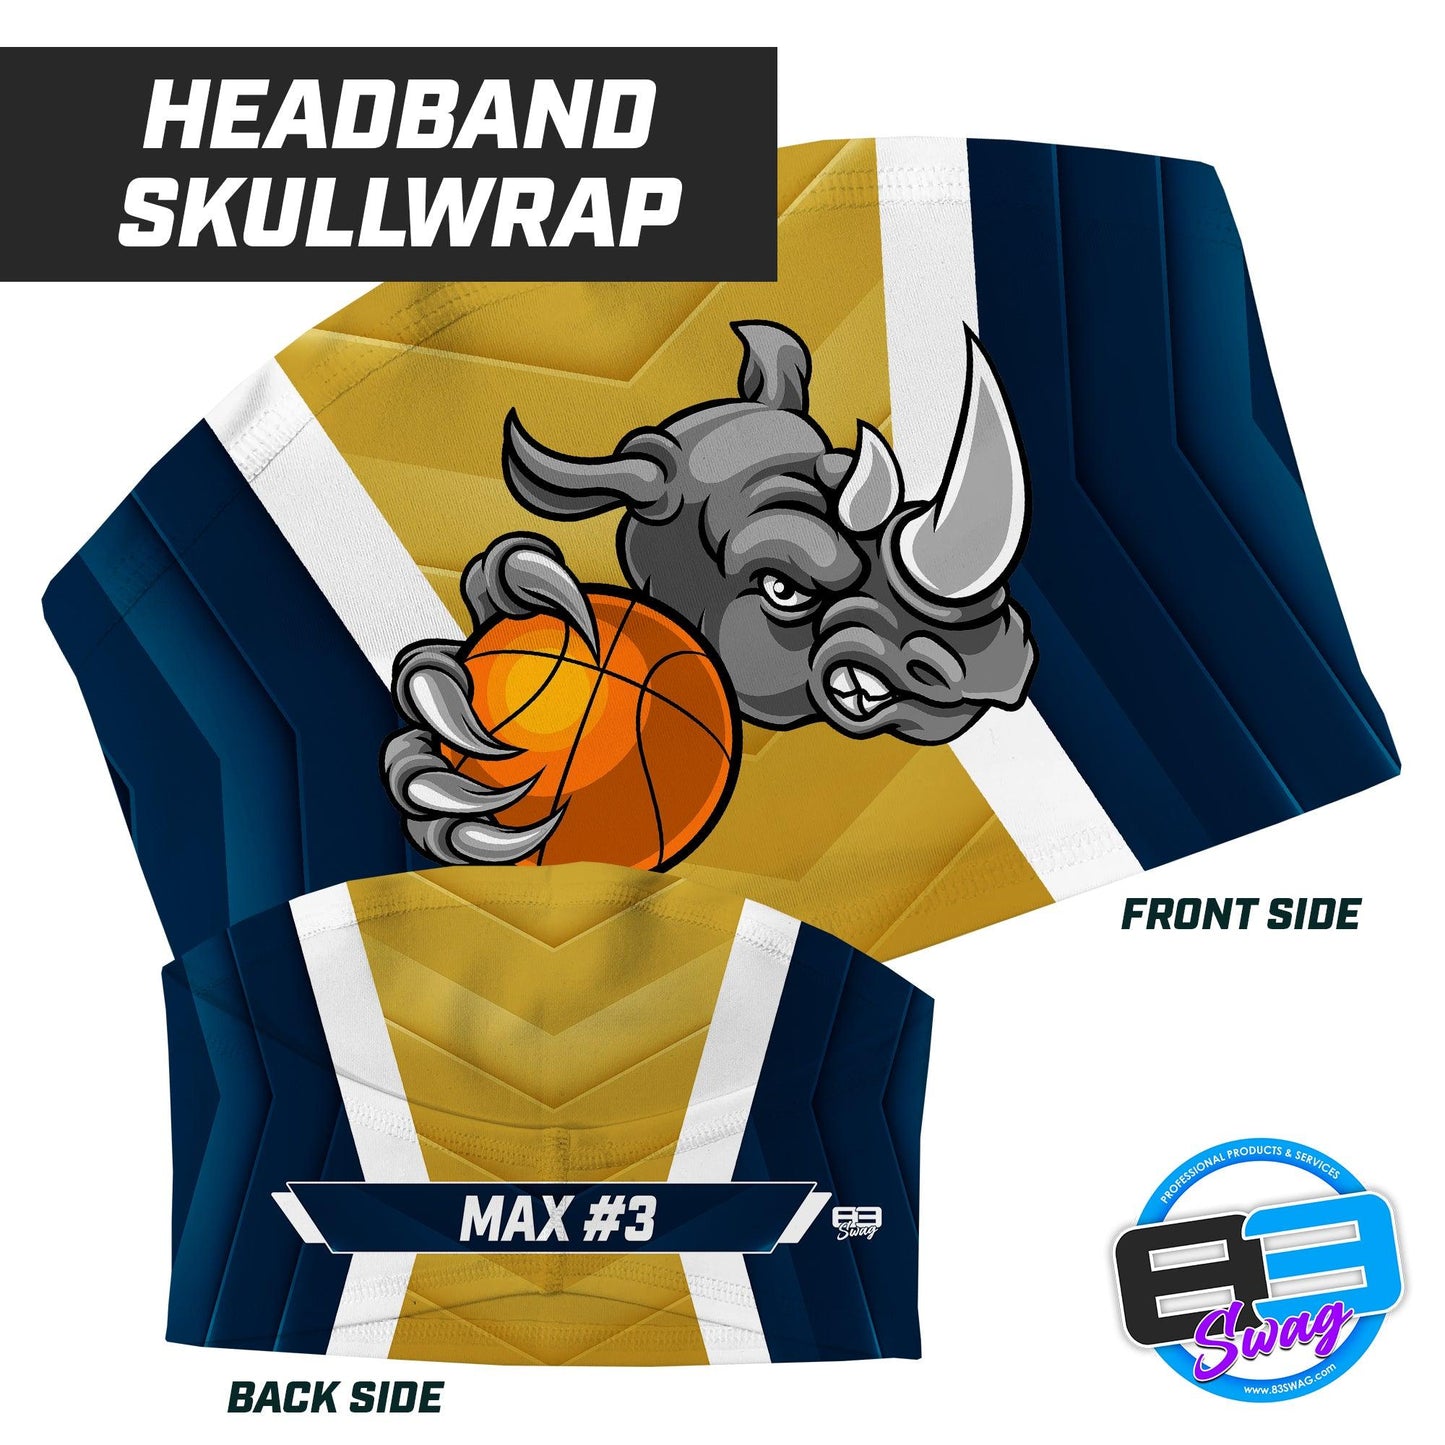 Rhino Basketball - Headband Skull Wrap